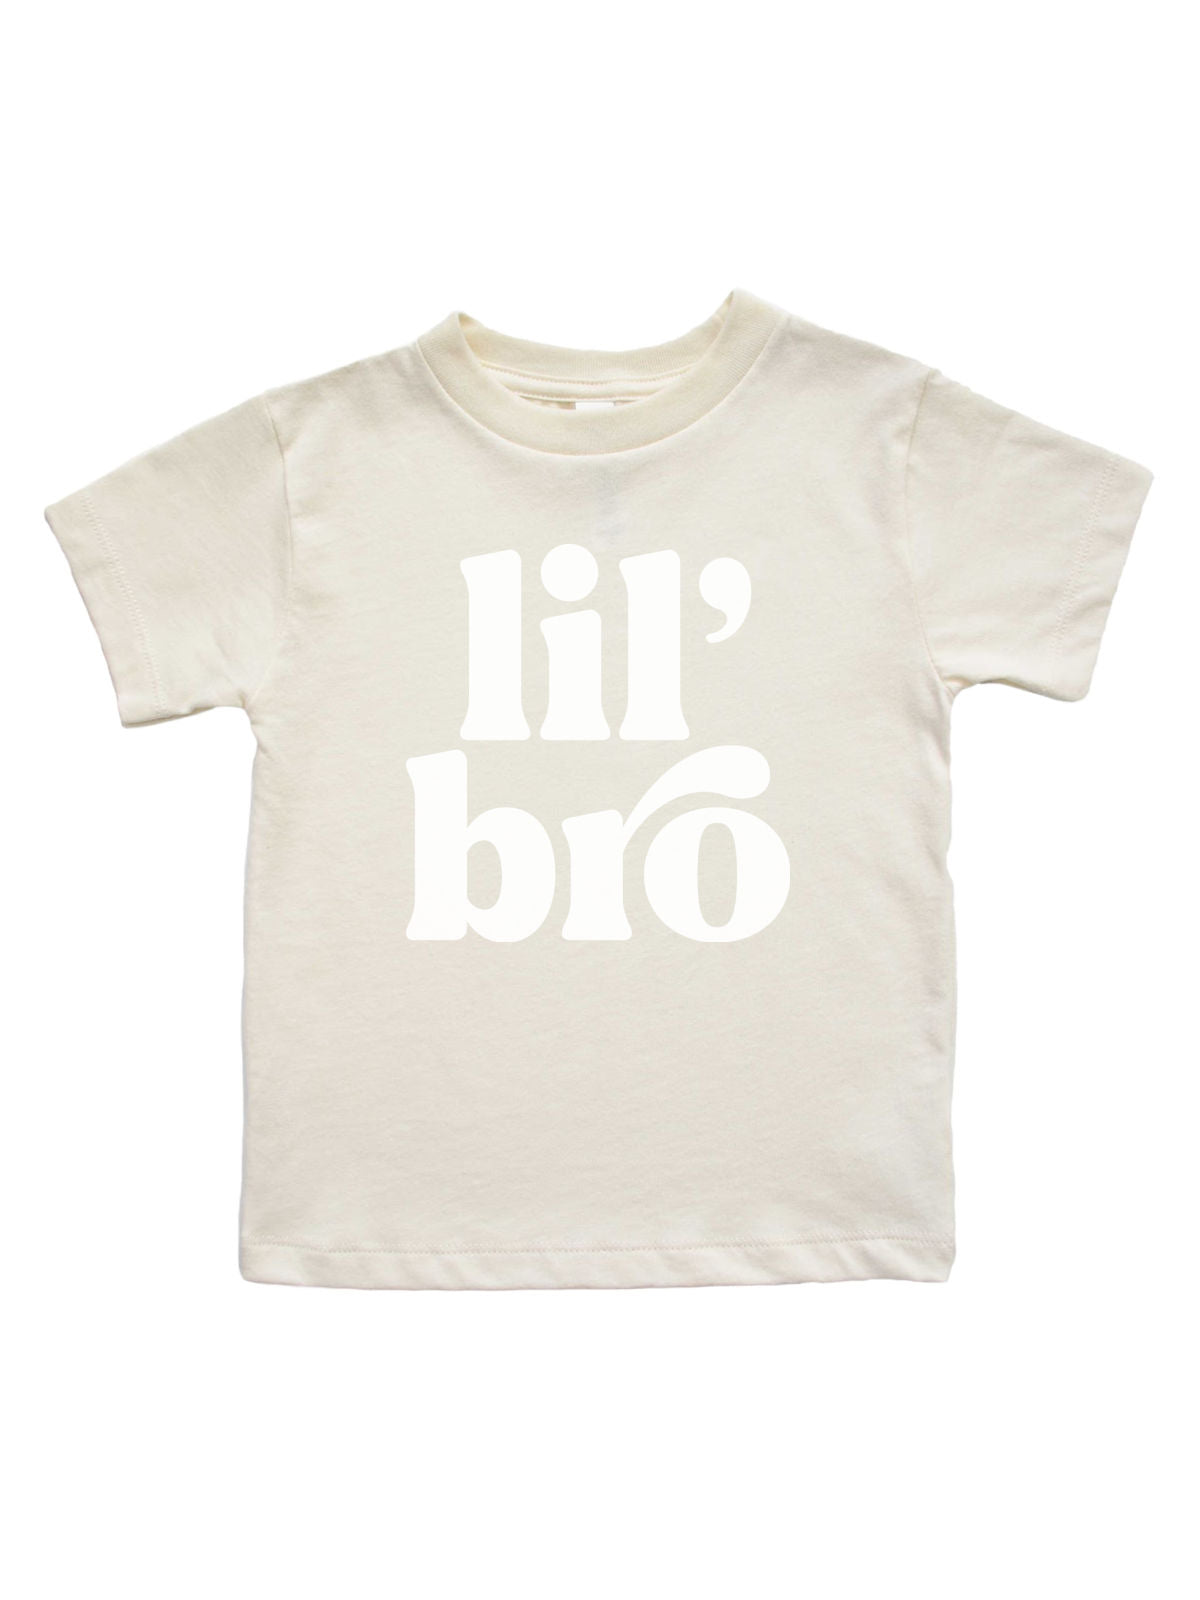 Lil Bro Baby Boy Shirt in Natural